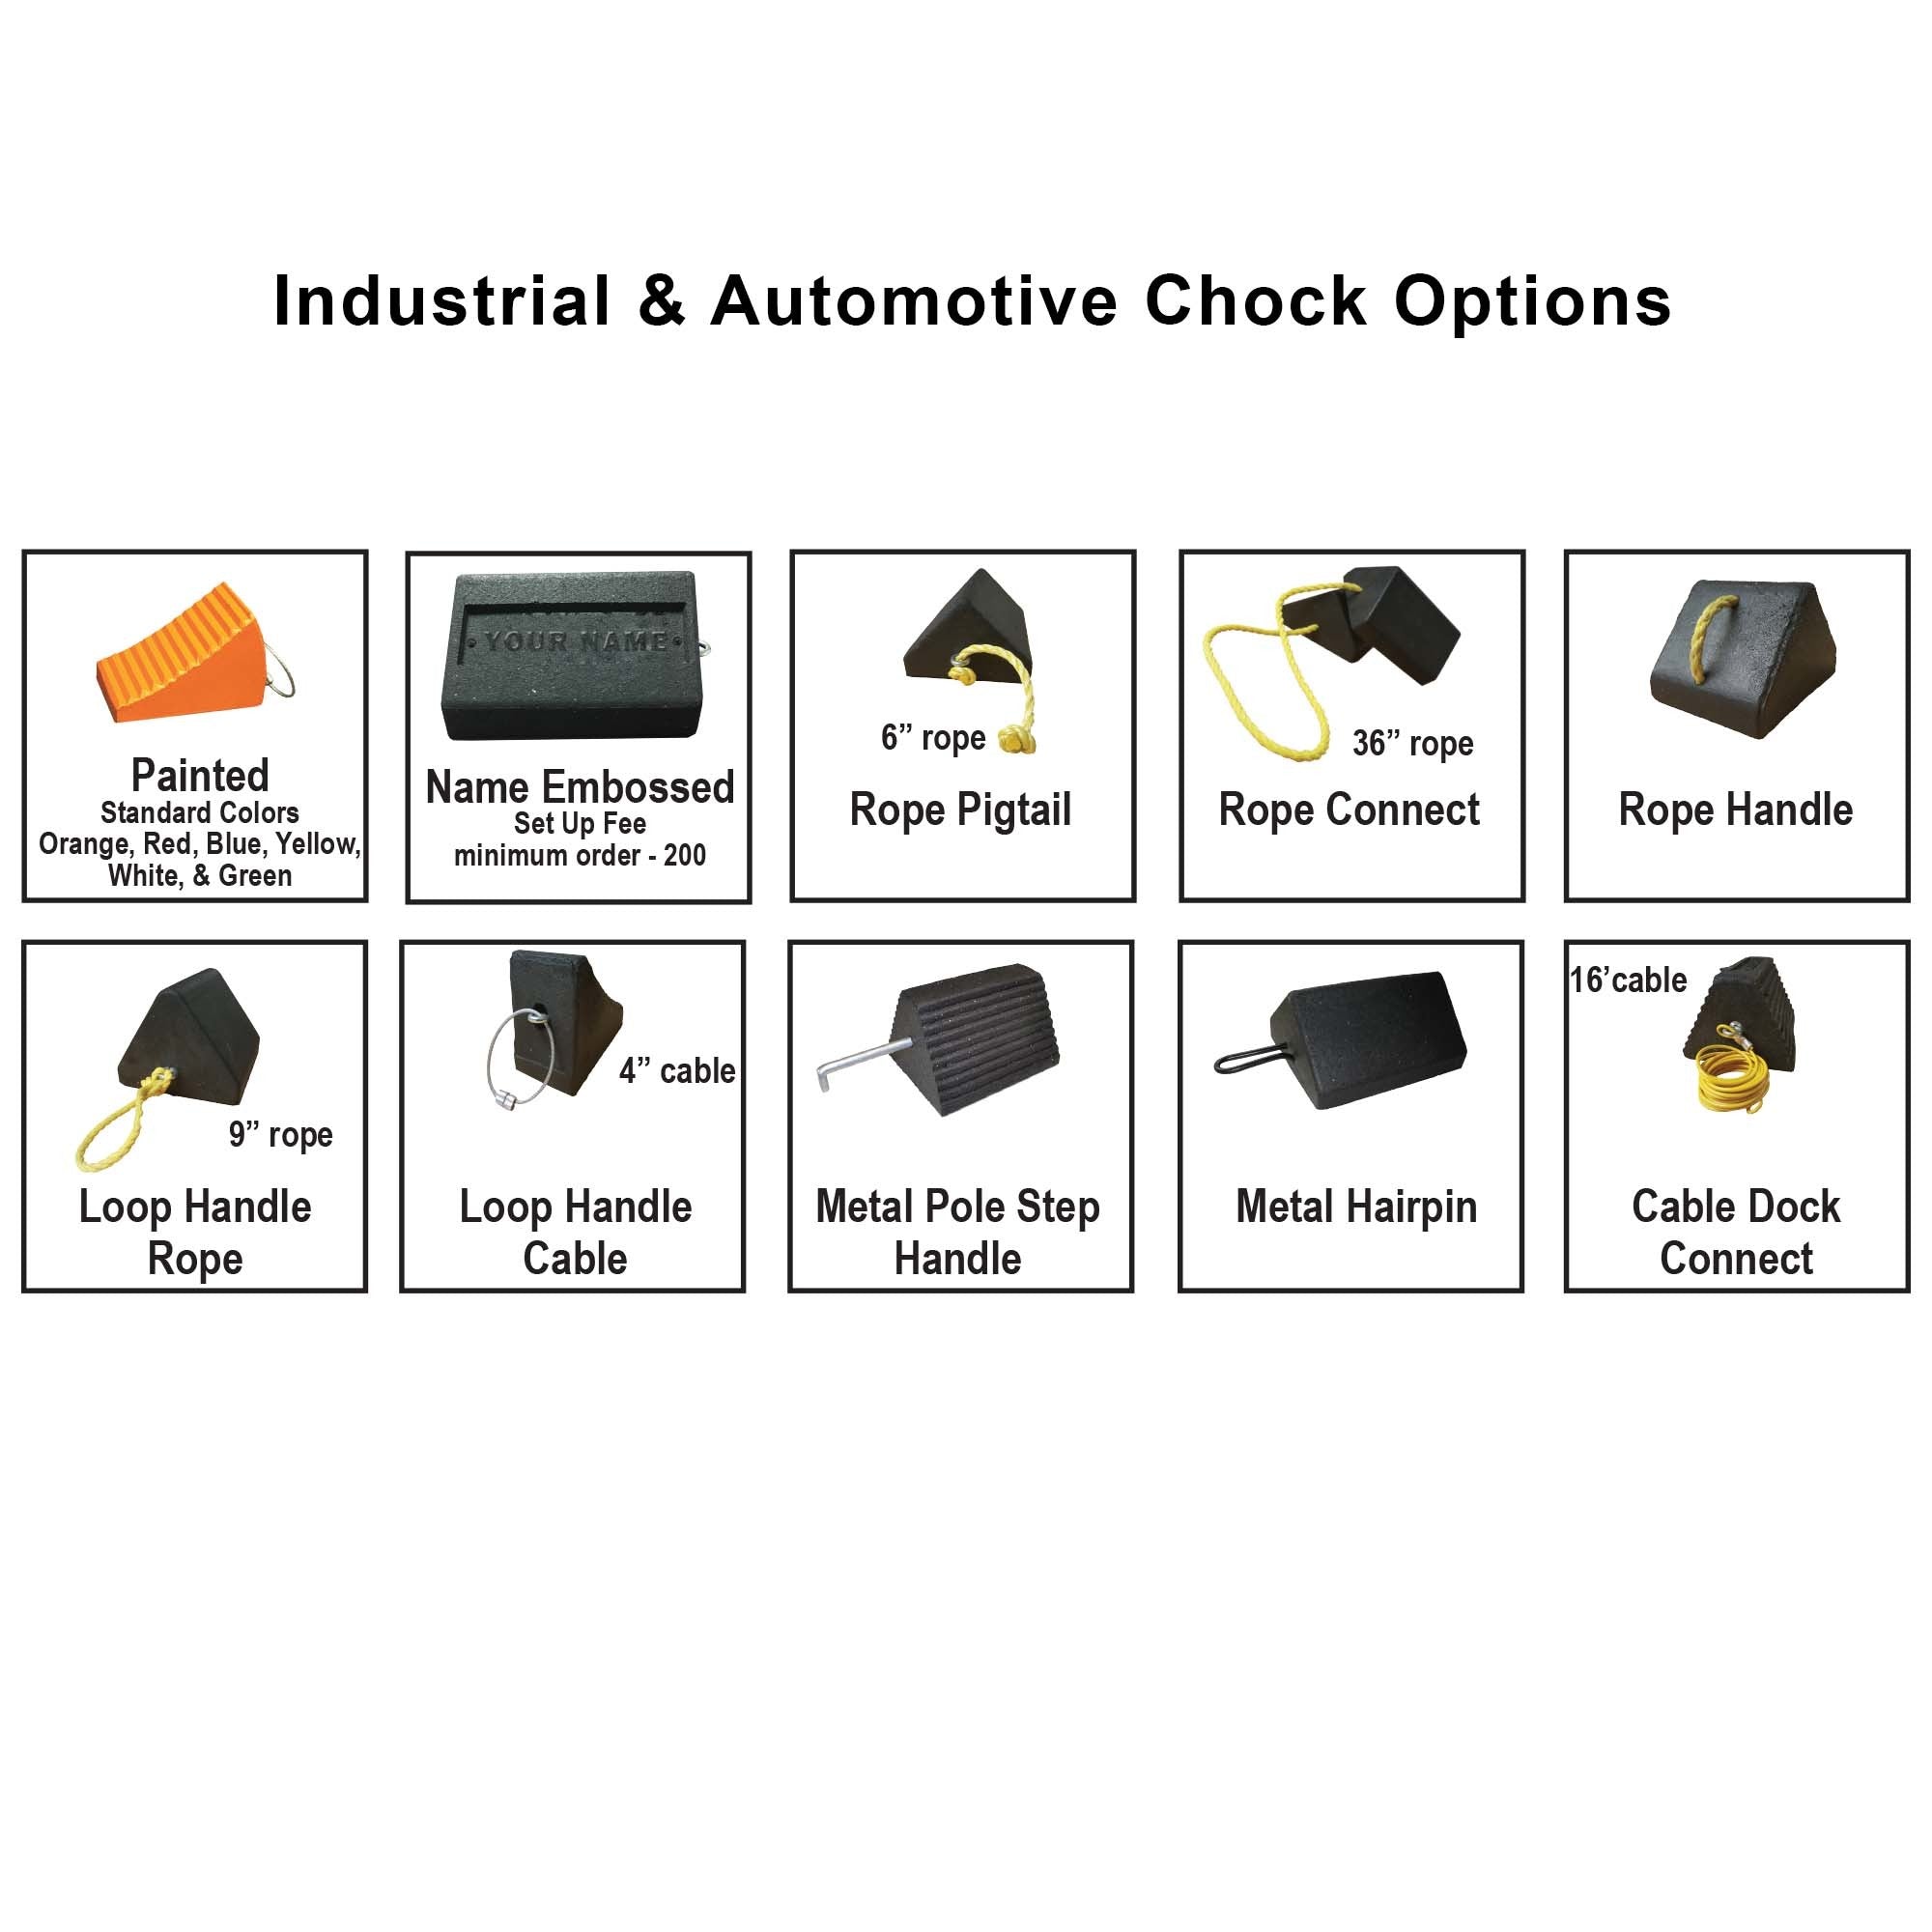 Automotive and Industrial Wheel Chocks